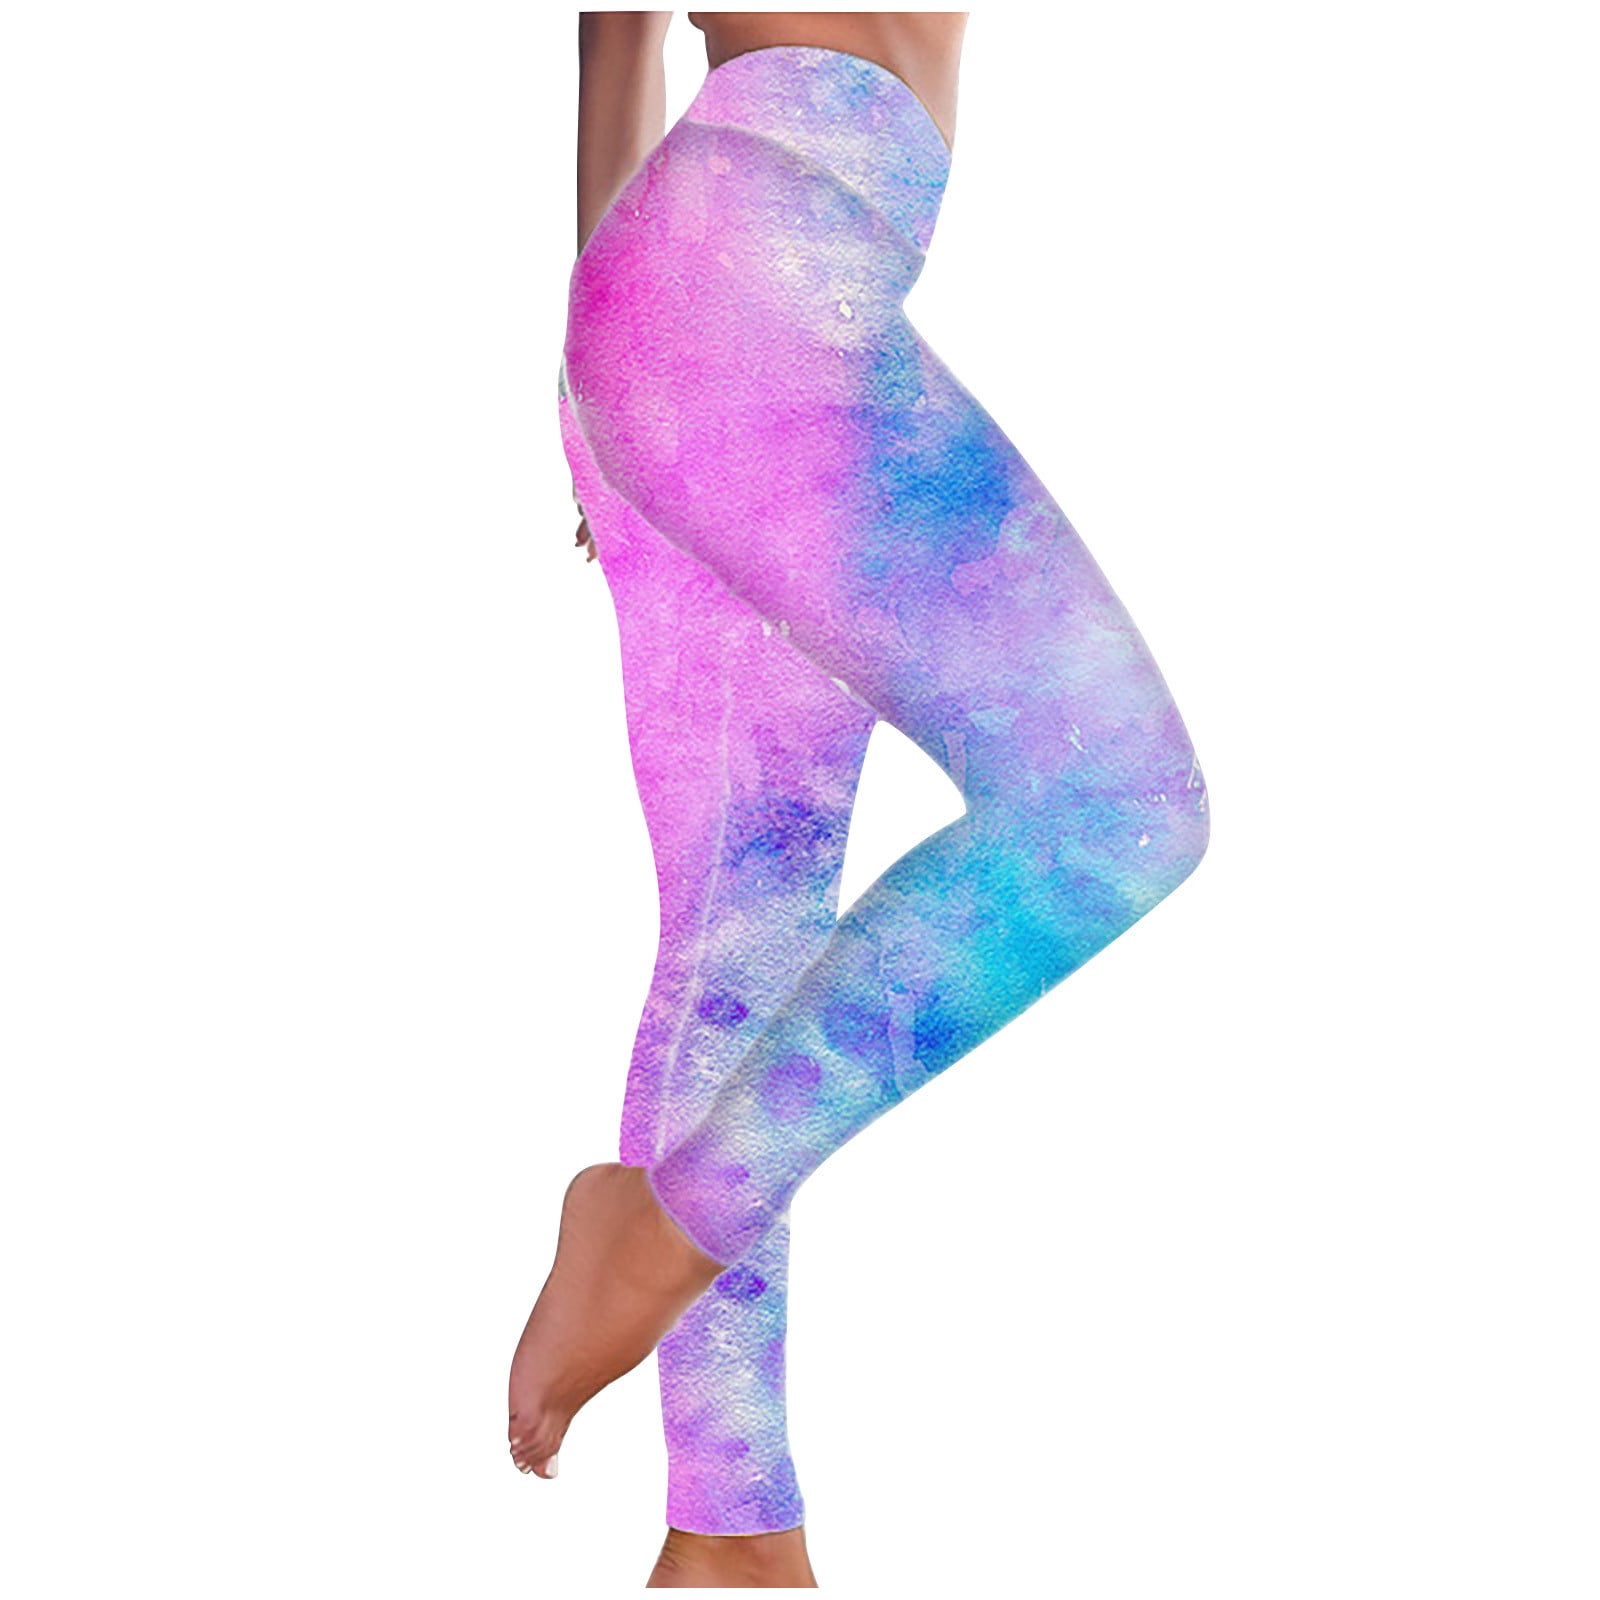 Tie-dye Workout Leggings Womens High Waist Slimming Yoga Long Pants Tight  Fit Printed S-3XL Plus Size Sportswear (3X-Large, Hot Pink) 